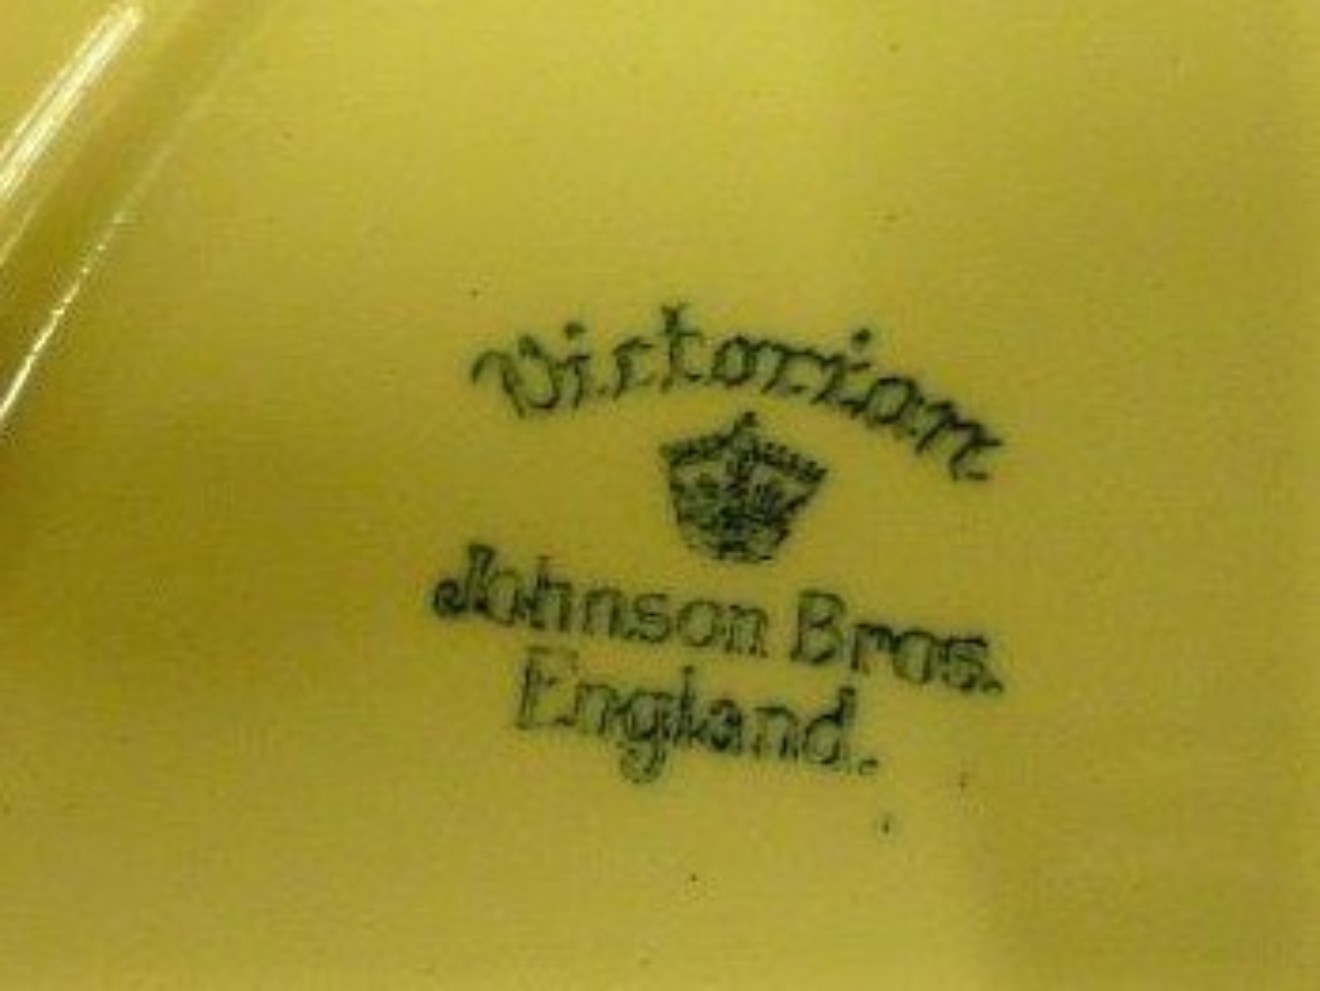 Lunch Service Johnson Bros London